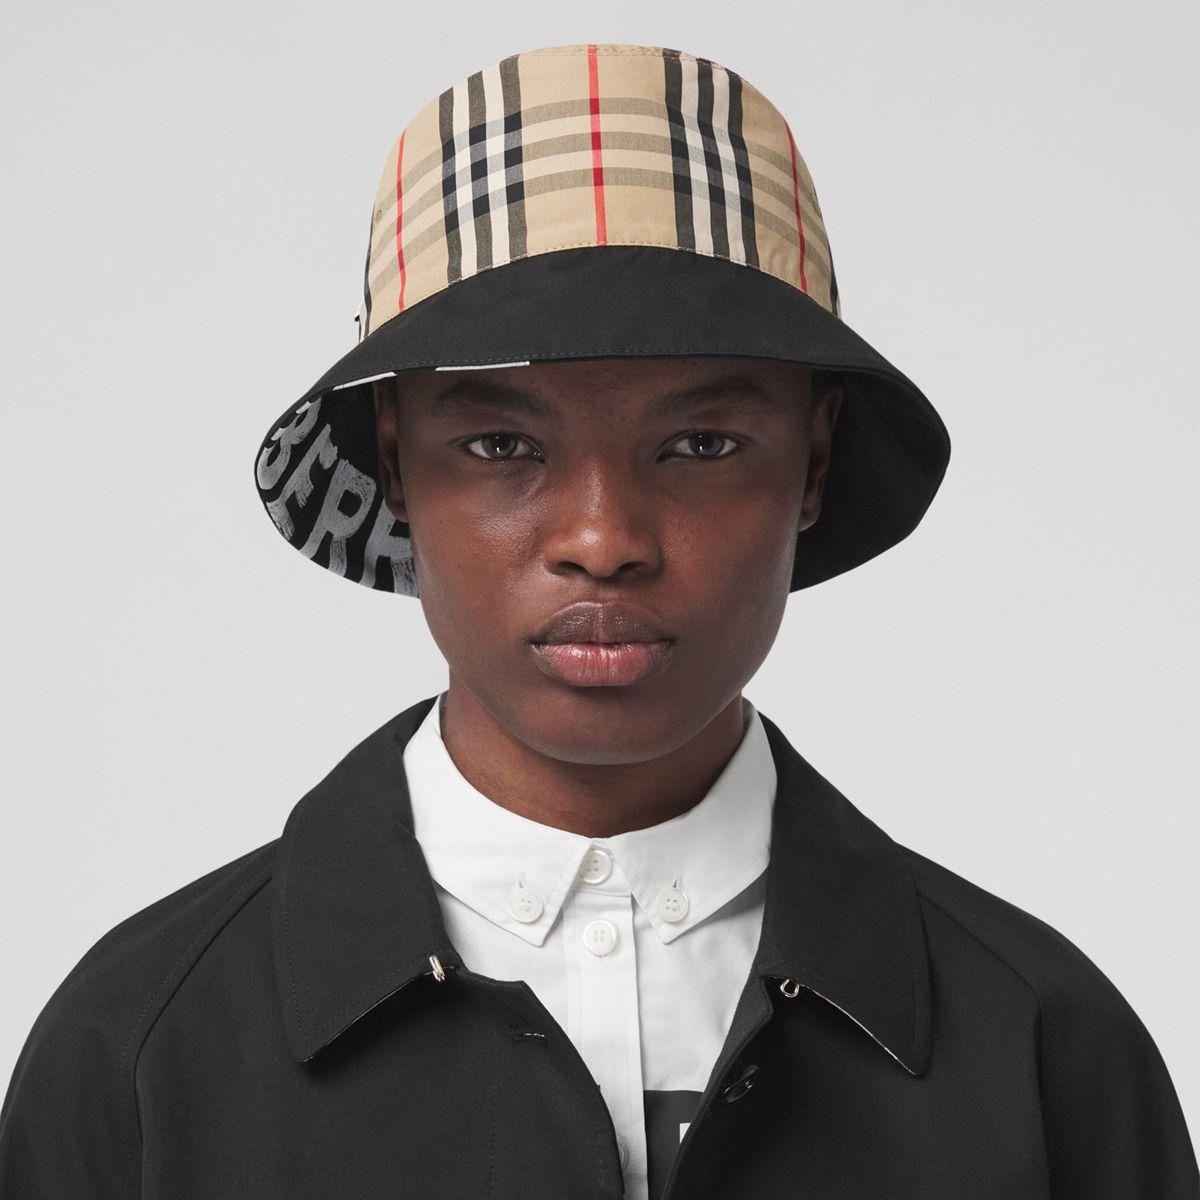 Burberry Reversible Logo Print Cotton Gabardine Bucket Hat in Black | Lyst